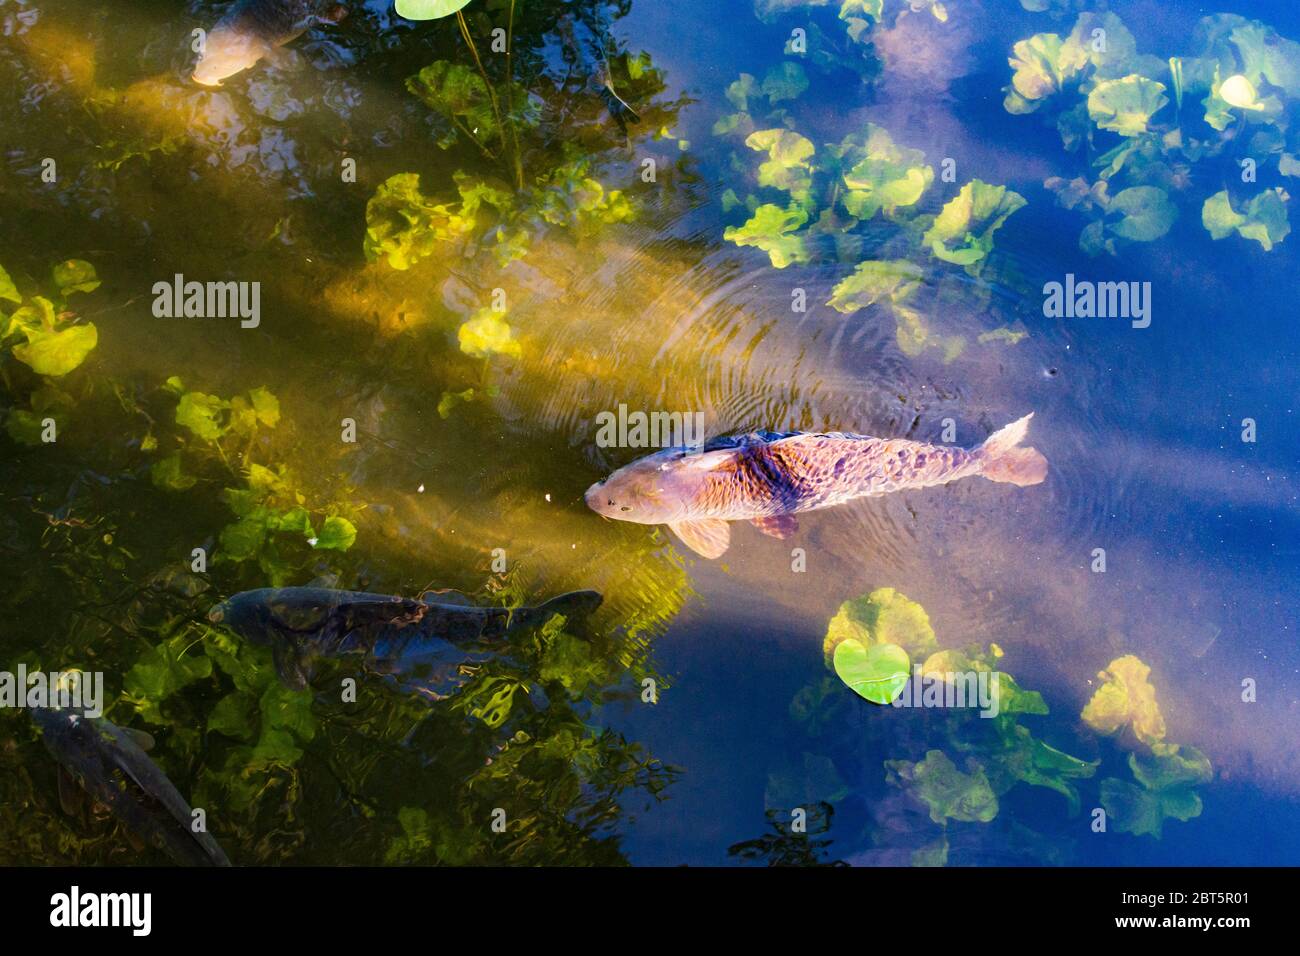 Wien, Vienna: common carp or European carp (Cyprinus carpio), in oxbow lake, in 22. Donaustadt, Wien, Austria Stock Photo